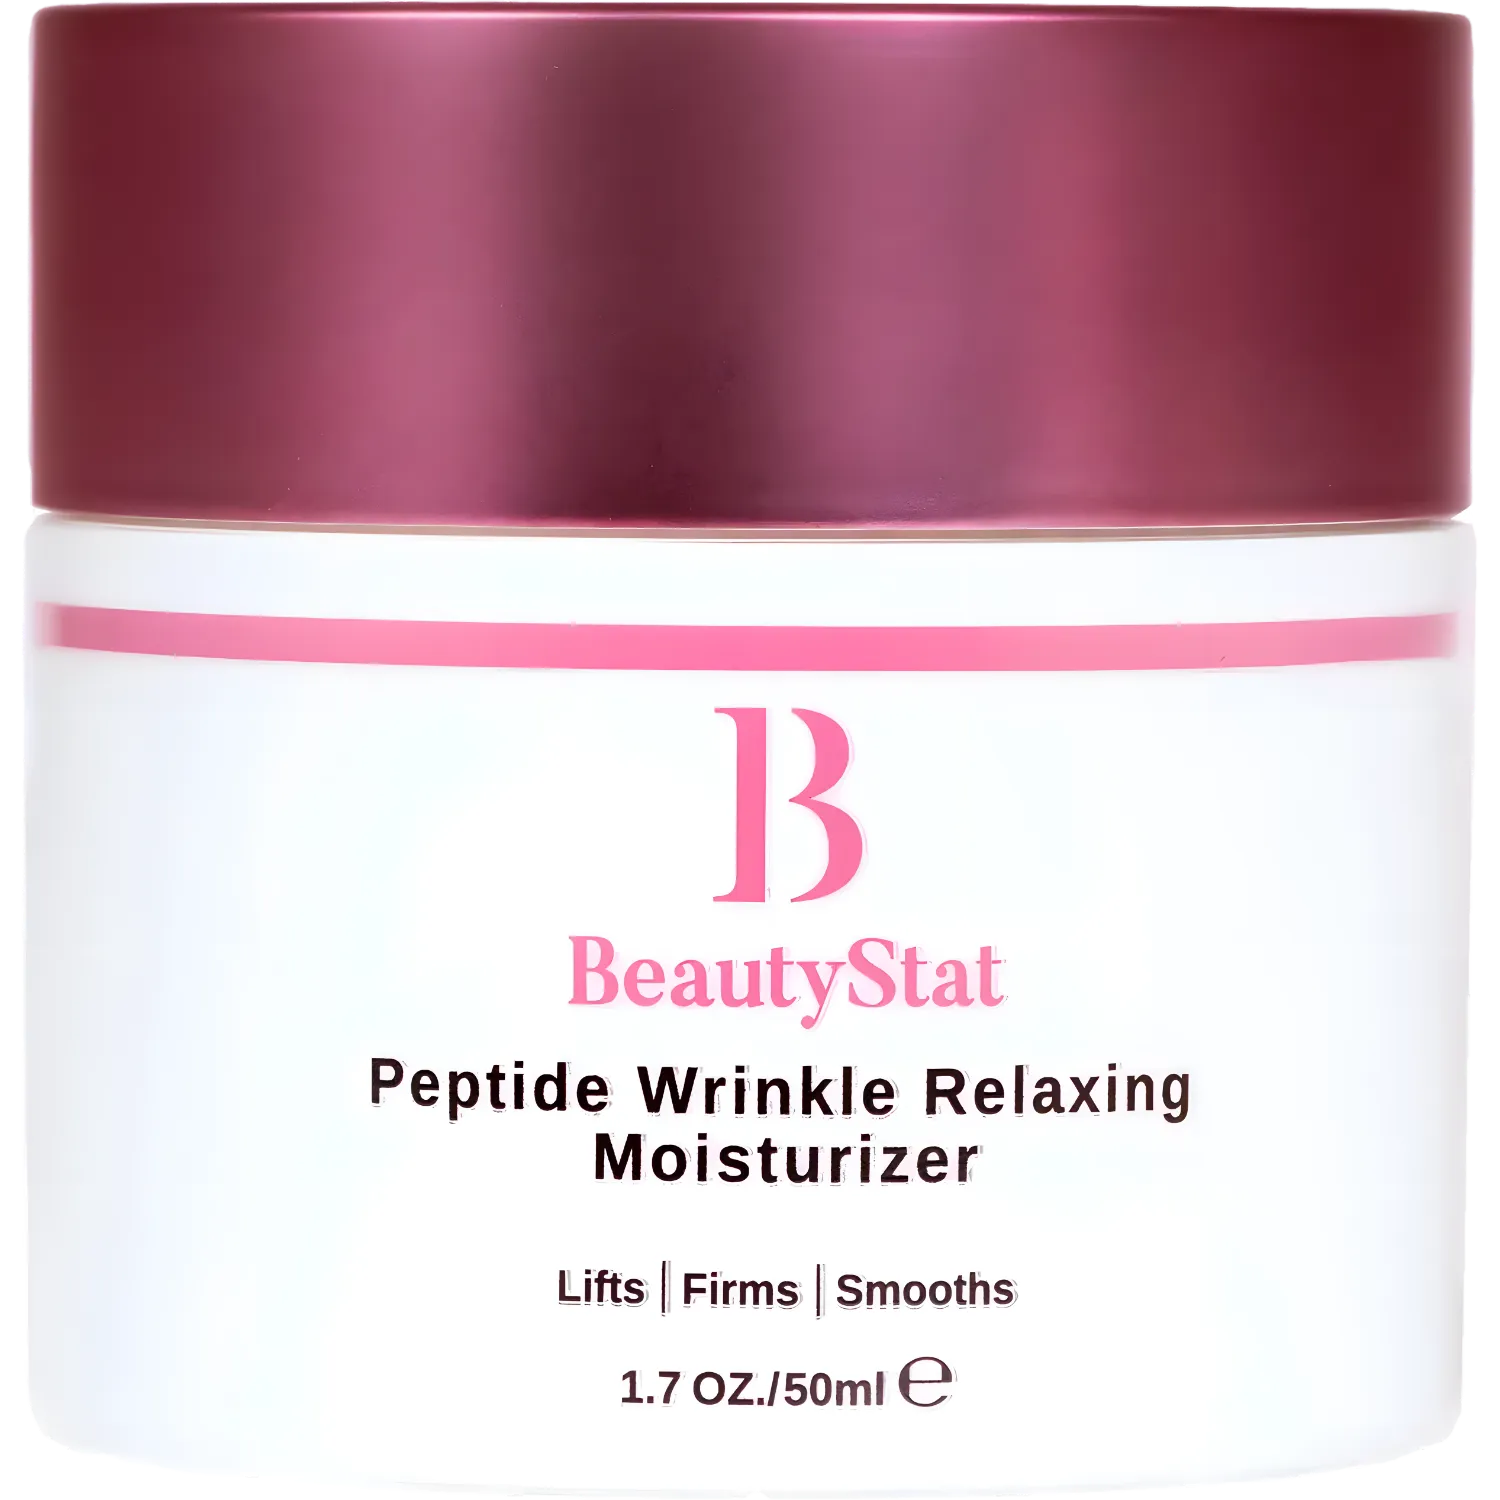 Free Full-Size Beautystat Peptide Wrinkle Relaxing Moisturizer Worth $72